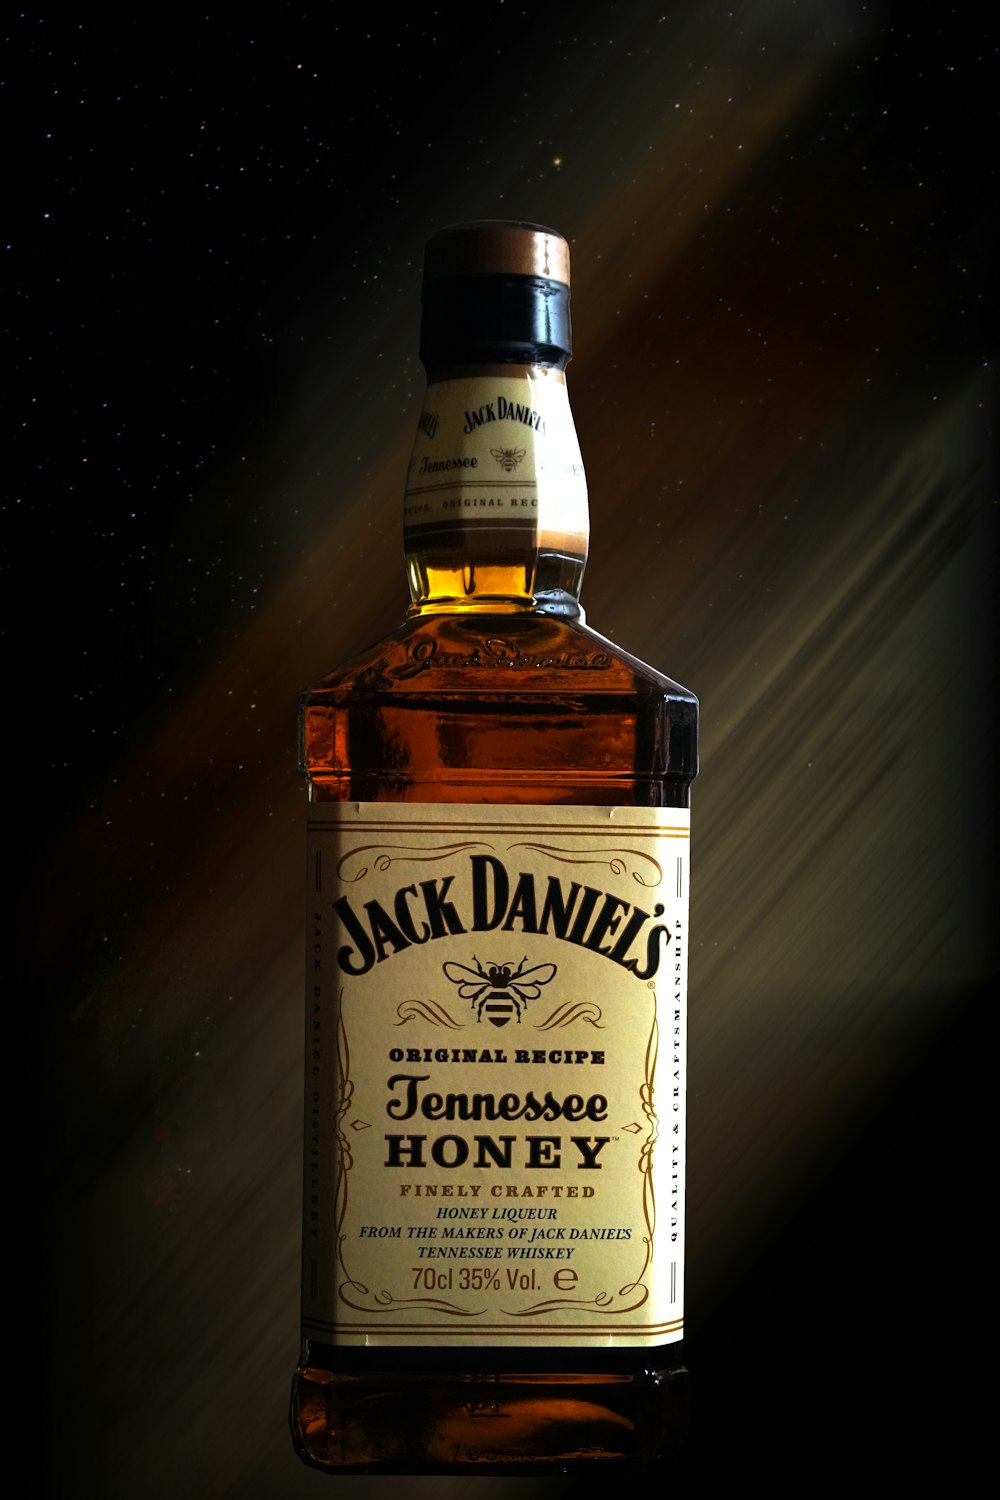 Jack Daniels Old No 7 Tennessee Honig